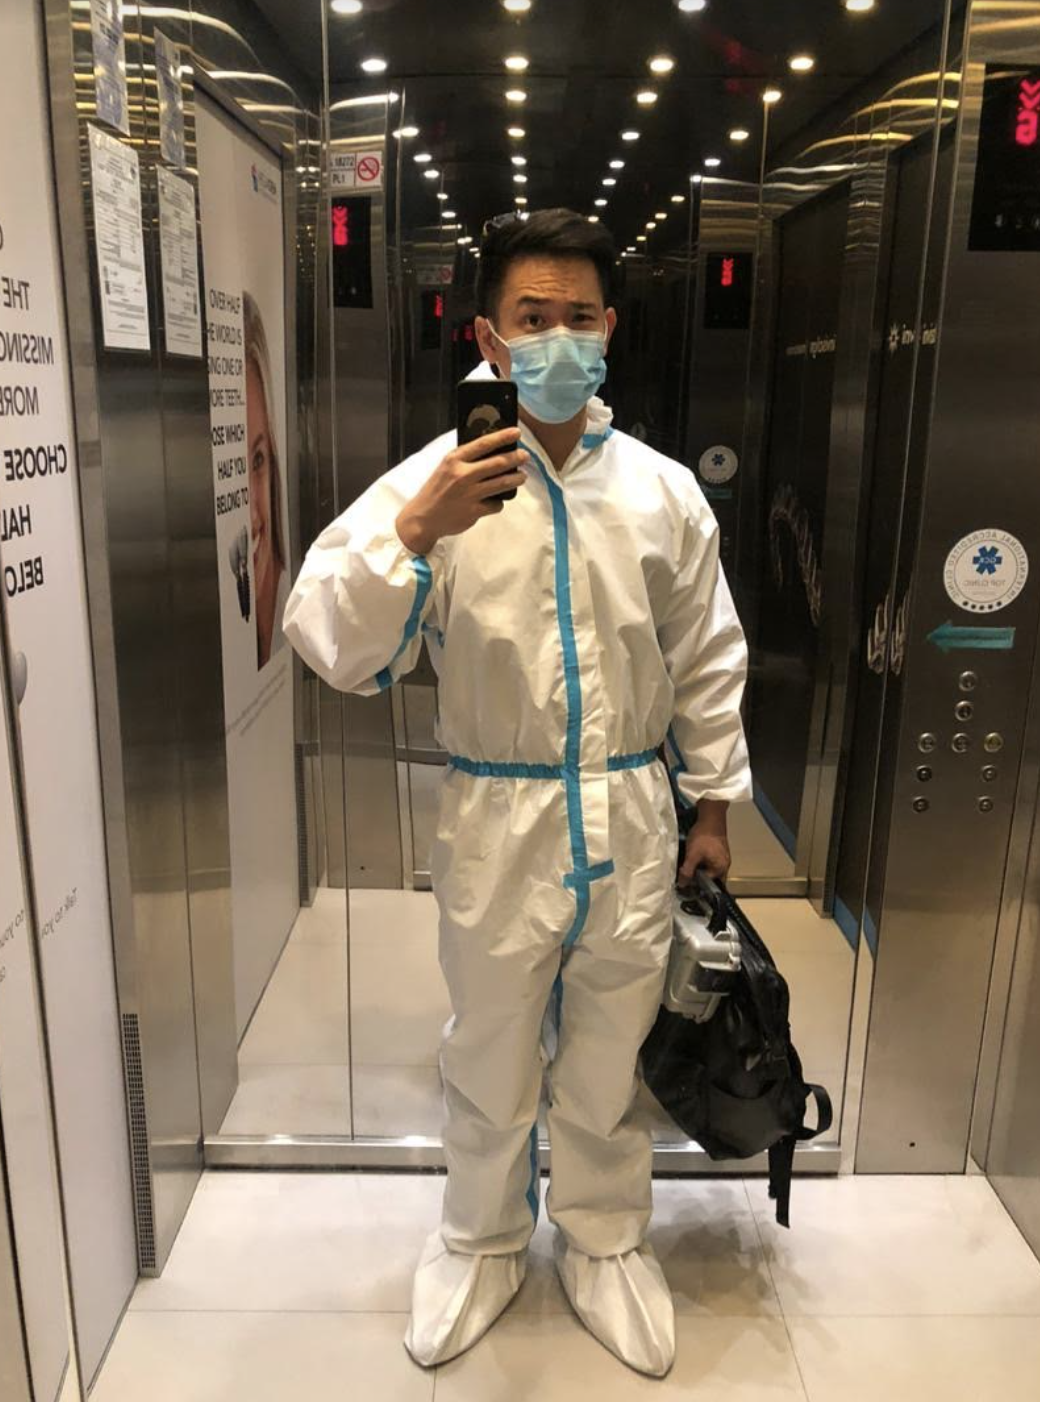 Selfie Dr. Gao took in elevator.